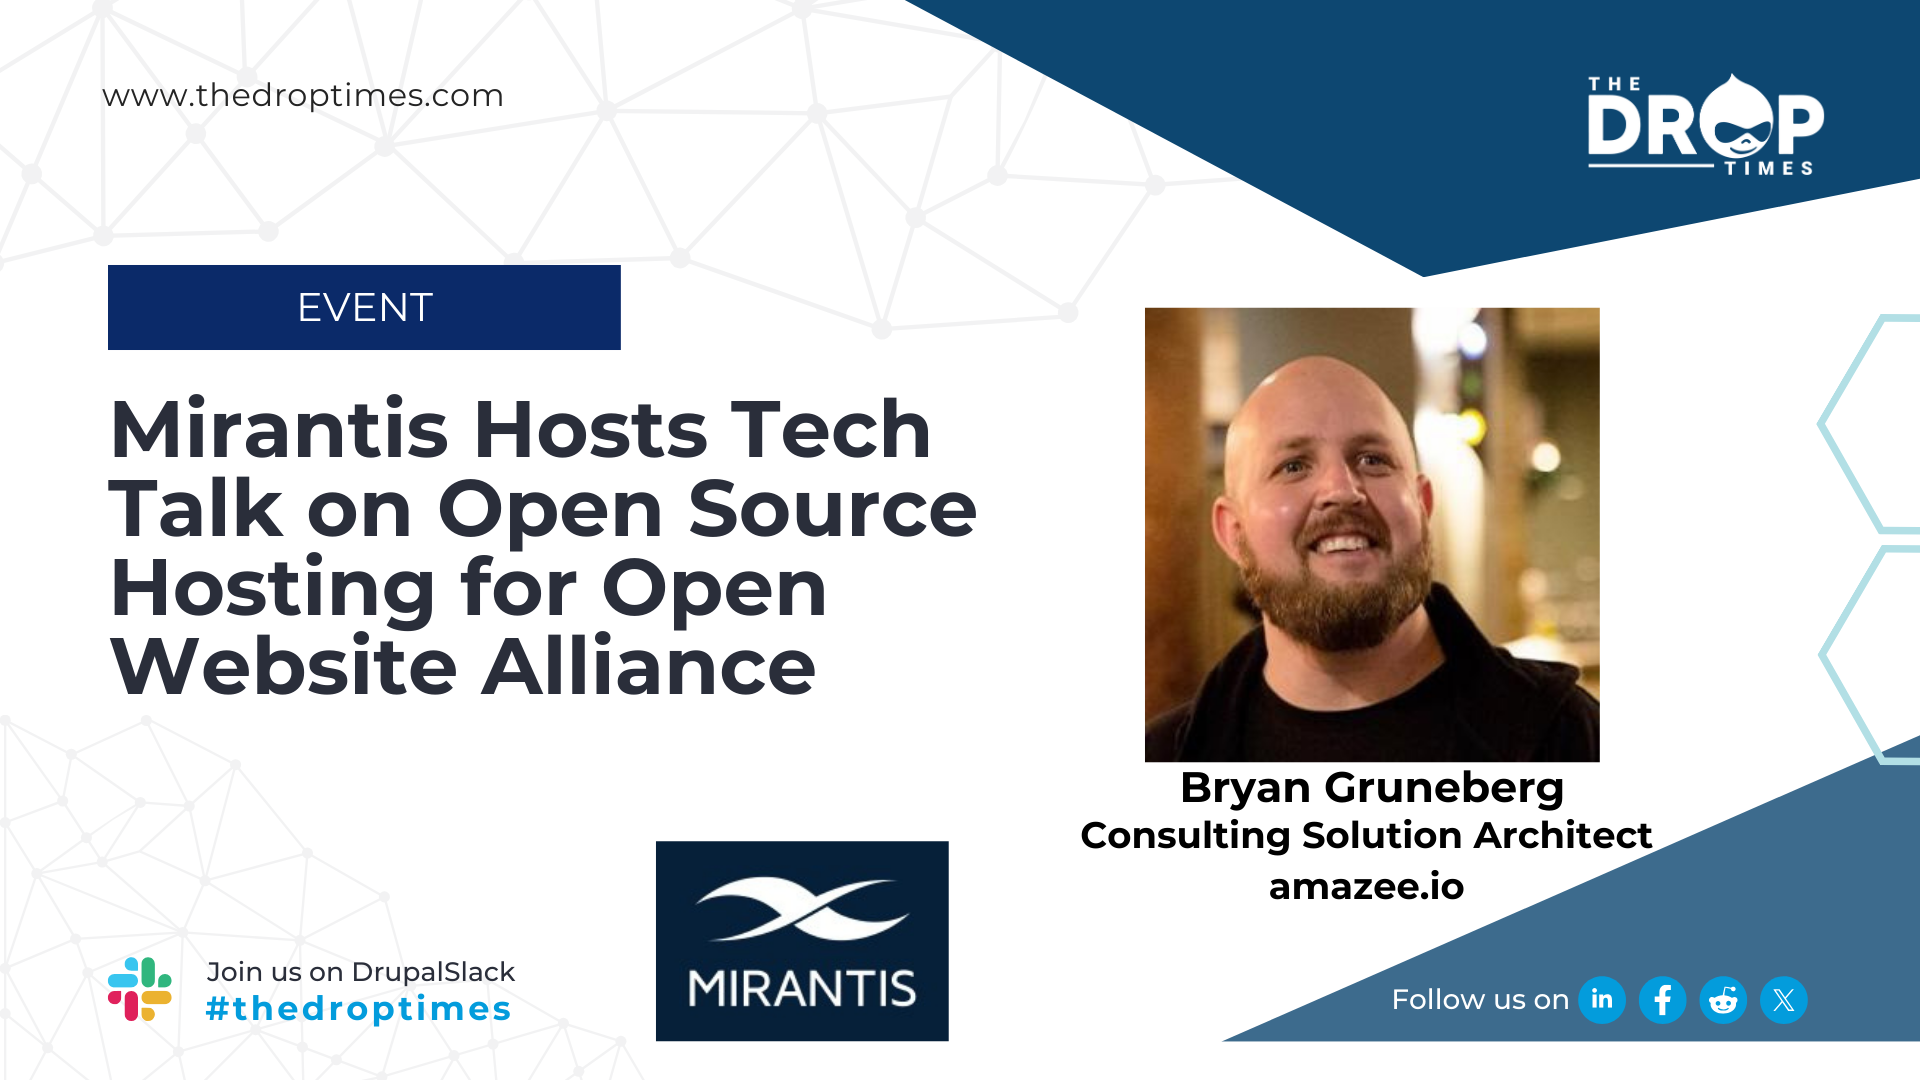 Mirantis Hosts Tech Talk on Open Source Hosting for Open Website Alliance